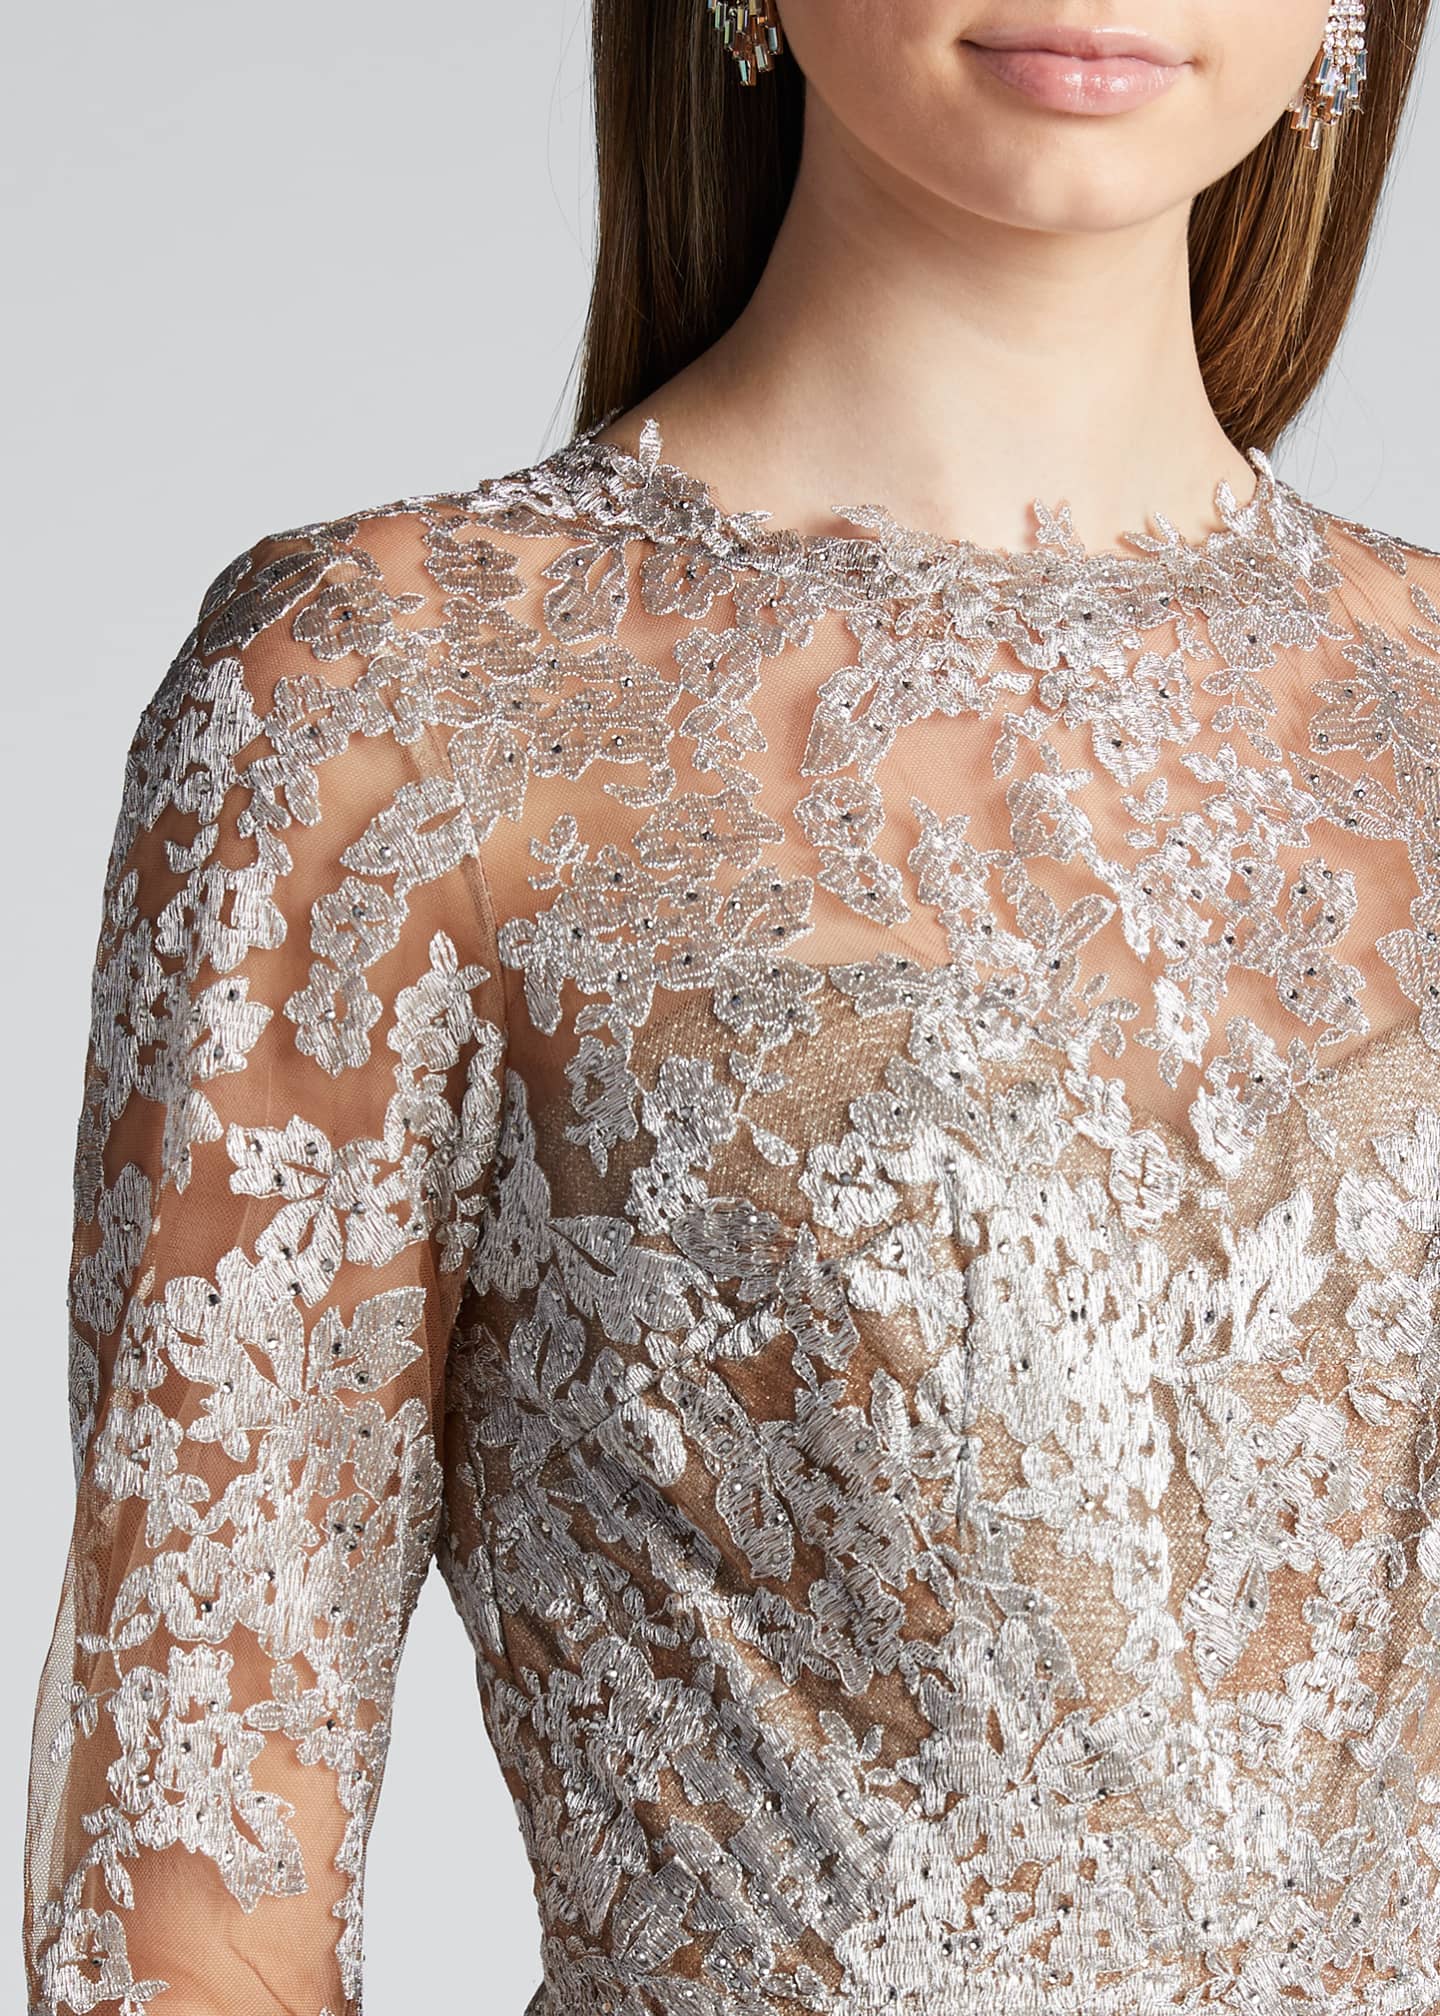 Rene Ruiz Long-Sleeve Lace Illusion Mermaid Gown - Bergdorf Goodman